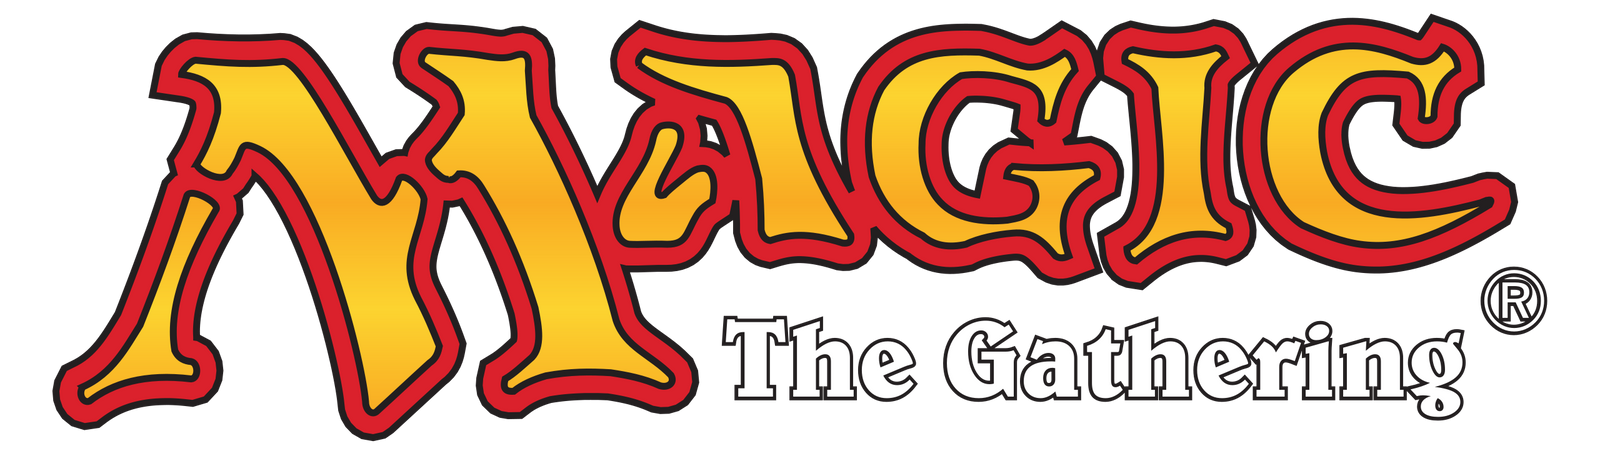 Magic the Gathering logo.